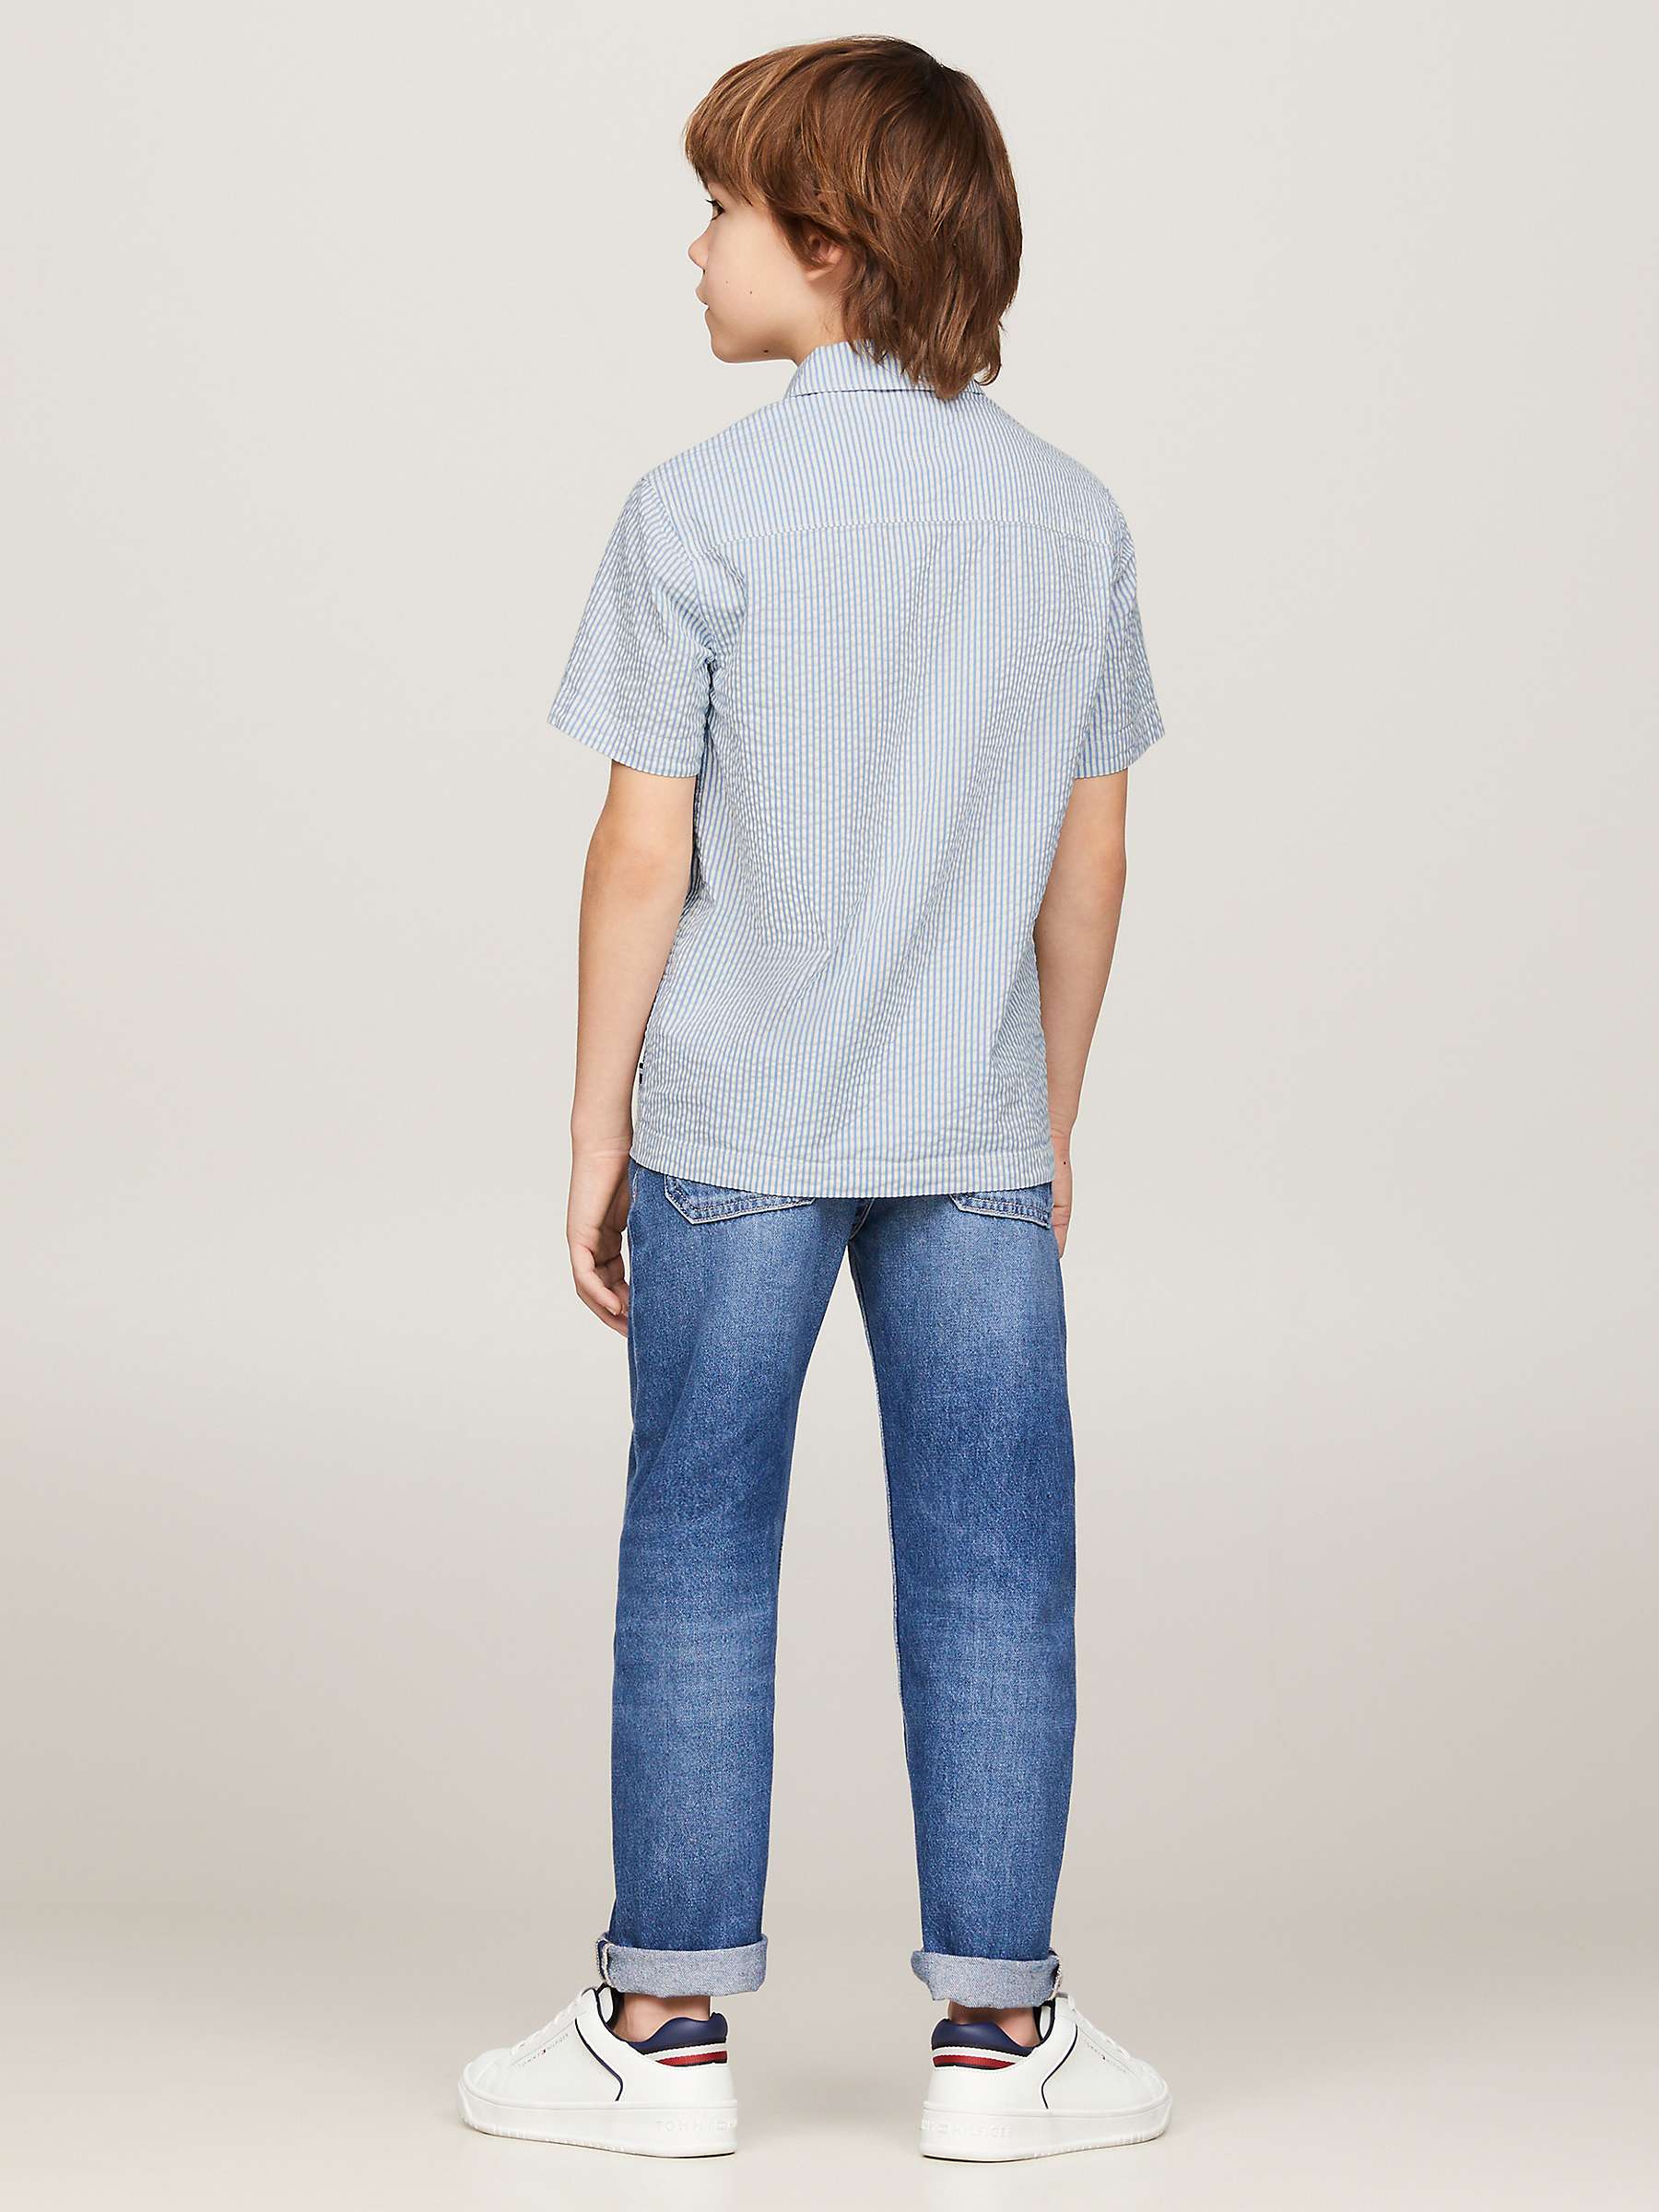 Buy Tommy Hilfiger Kids' Flag Seersucker Stripe Short Sleeve Shirt, Blue Spell Online at johnlewis.com